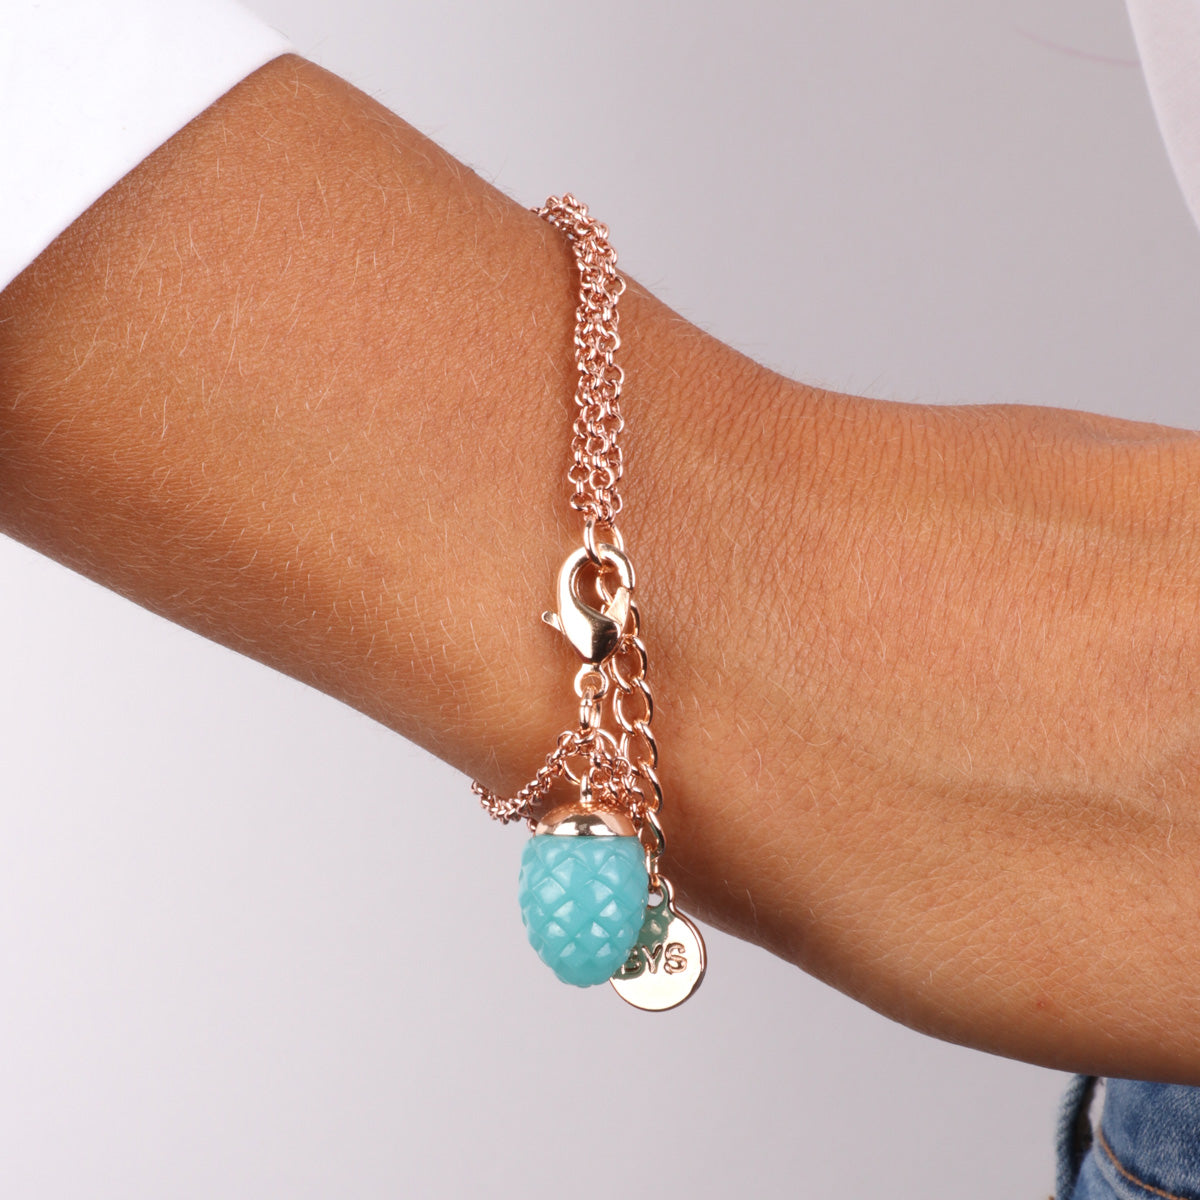 Metal bracelet with turquoise enamel charming pine -shaped pendant